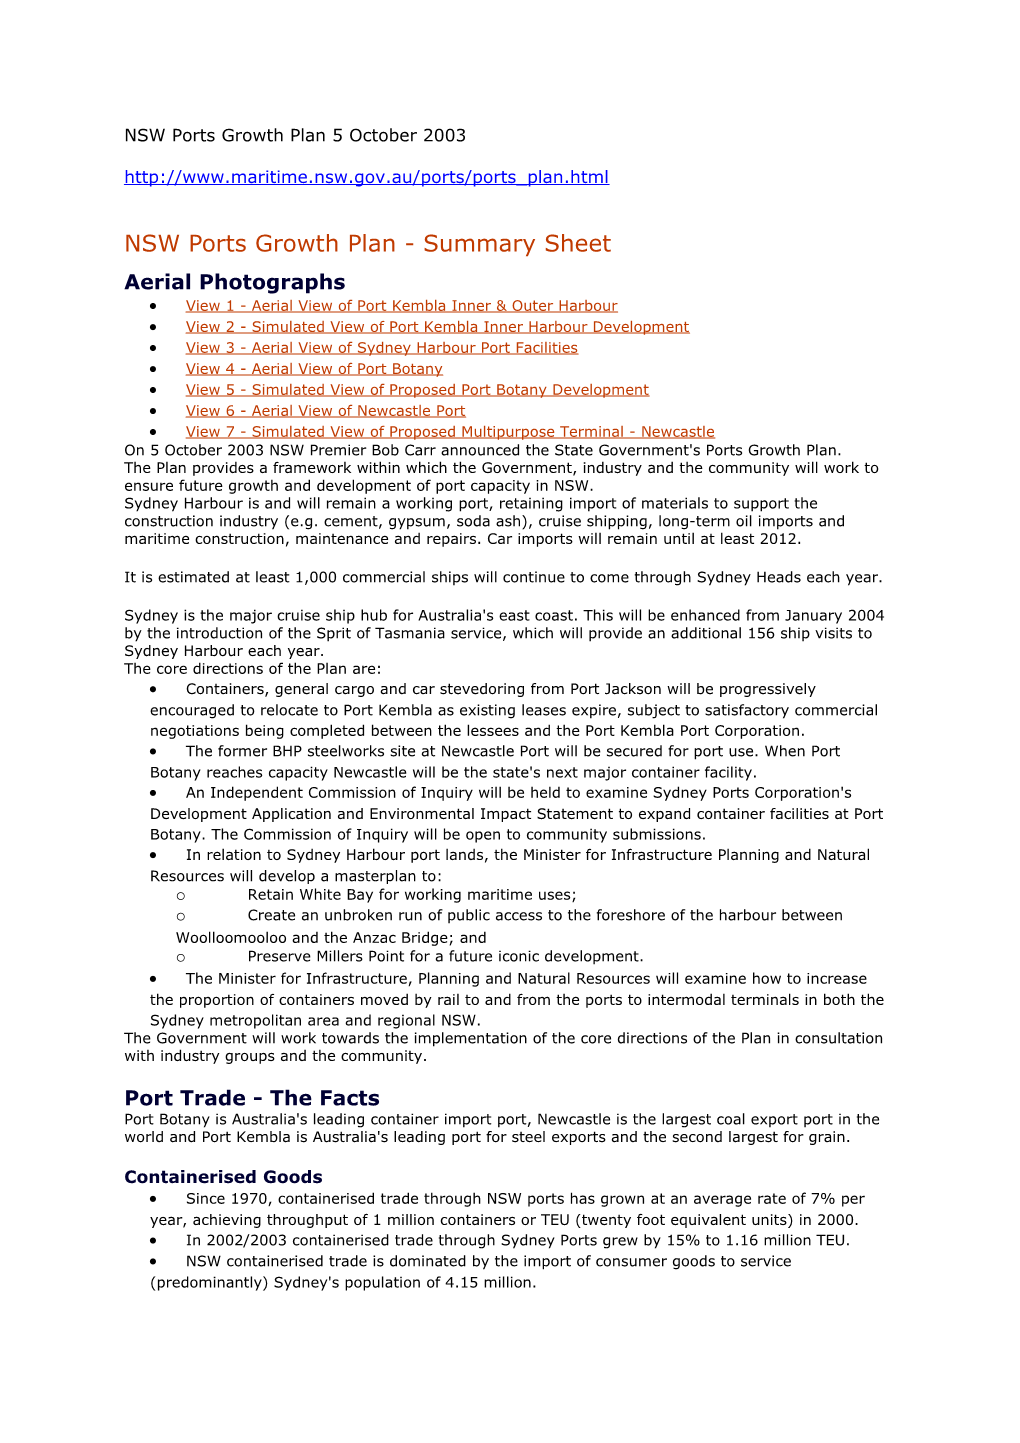 NSW Ports Growth Plan - Summary Sheet